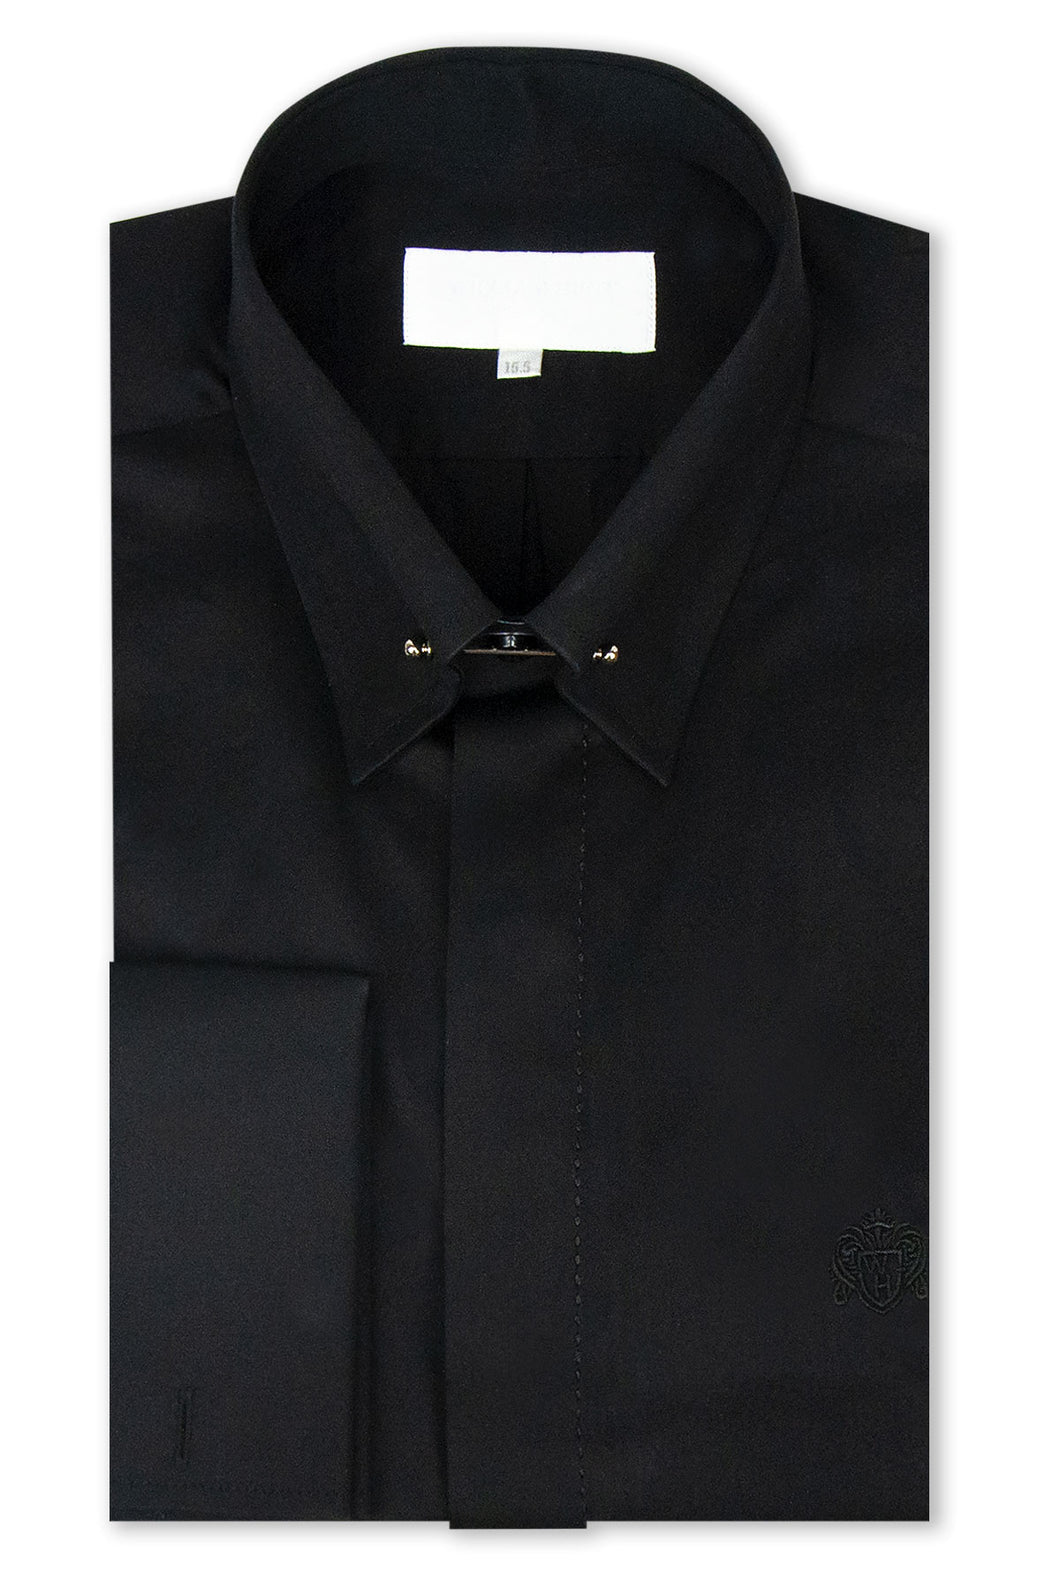 Black Pin Collar Shirt